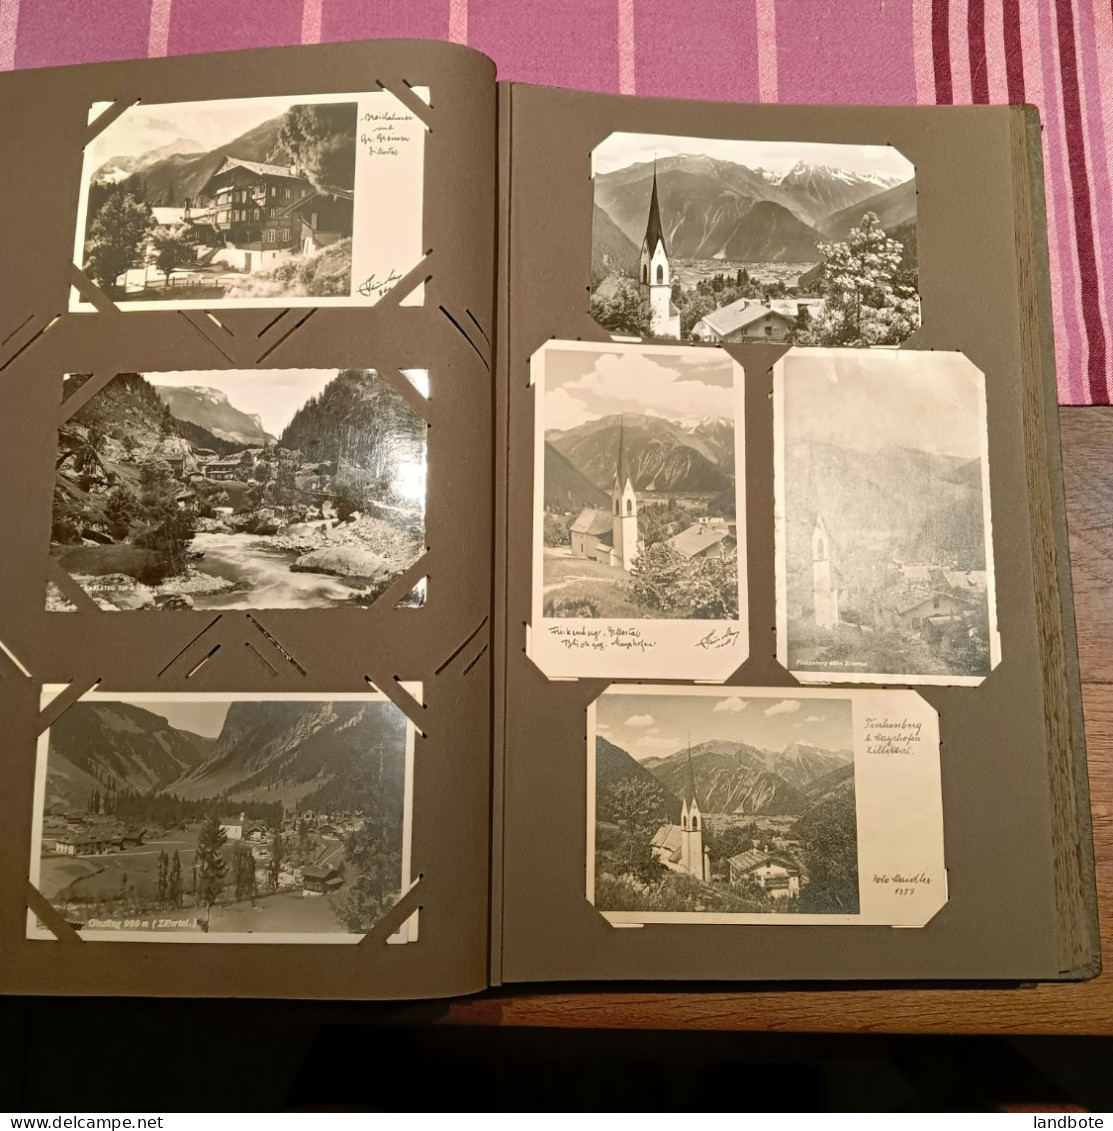 Ansichtskartenalbum mit 287 Ansichten aus dem Zillertal - Mayrhofen - Zell am Ziller - Hintertux ...